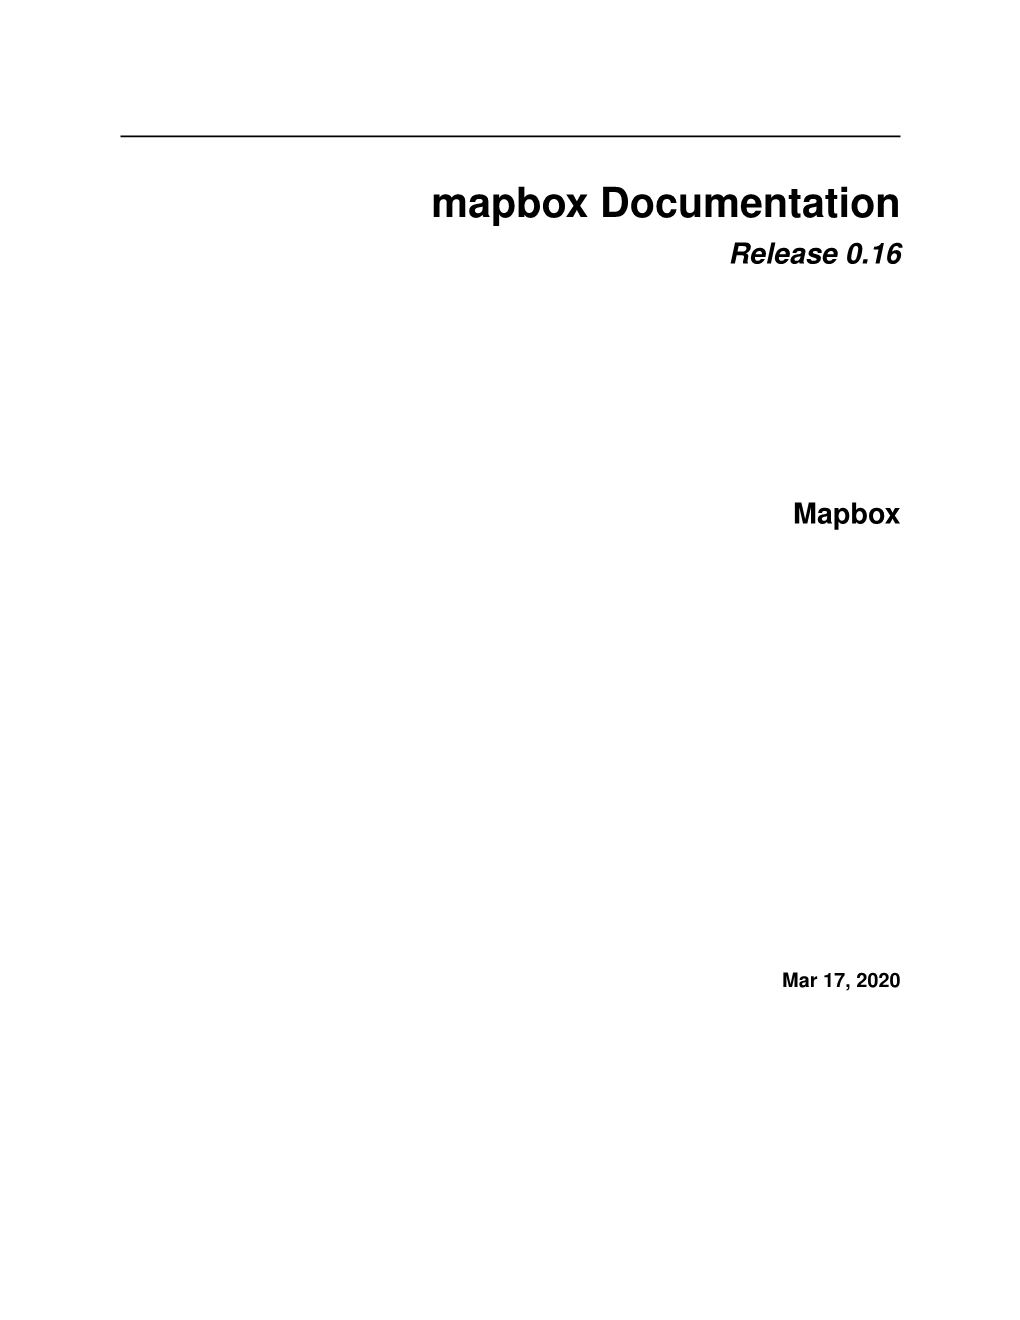 Mapbox Documentation Release 0.16